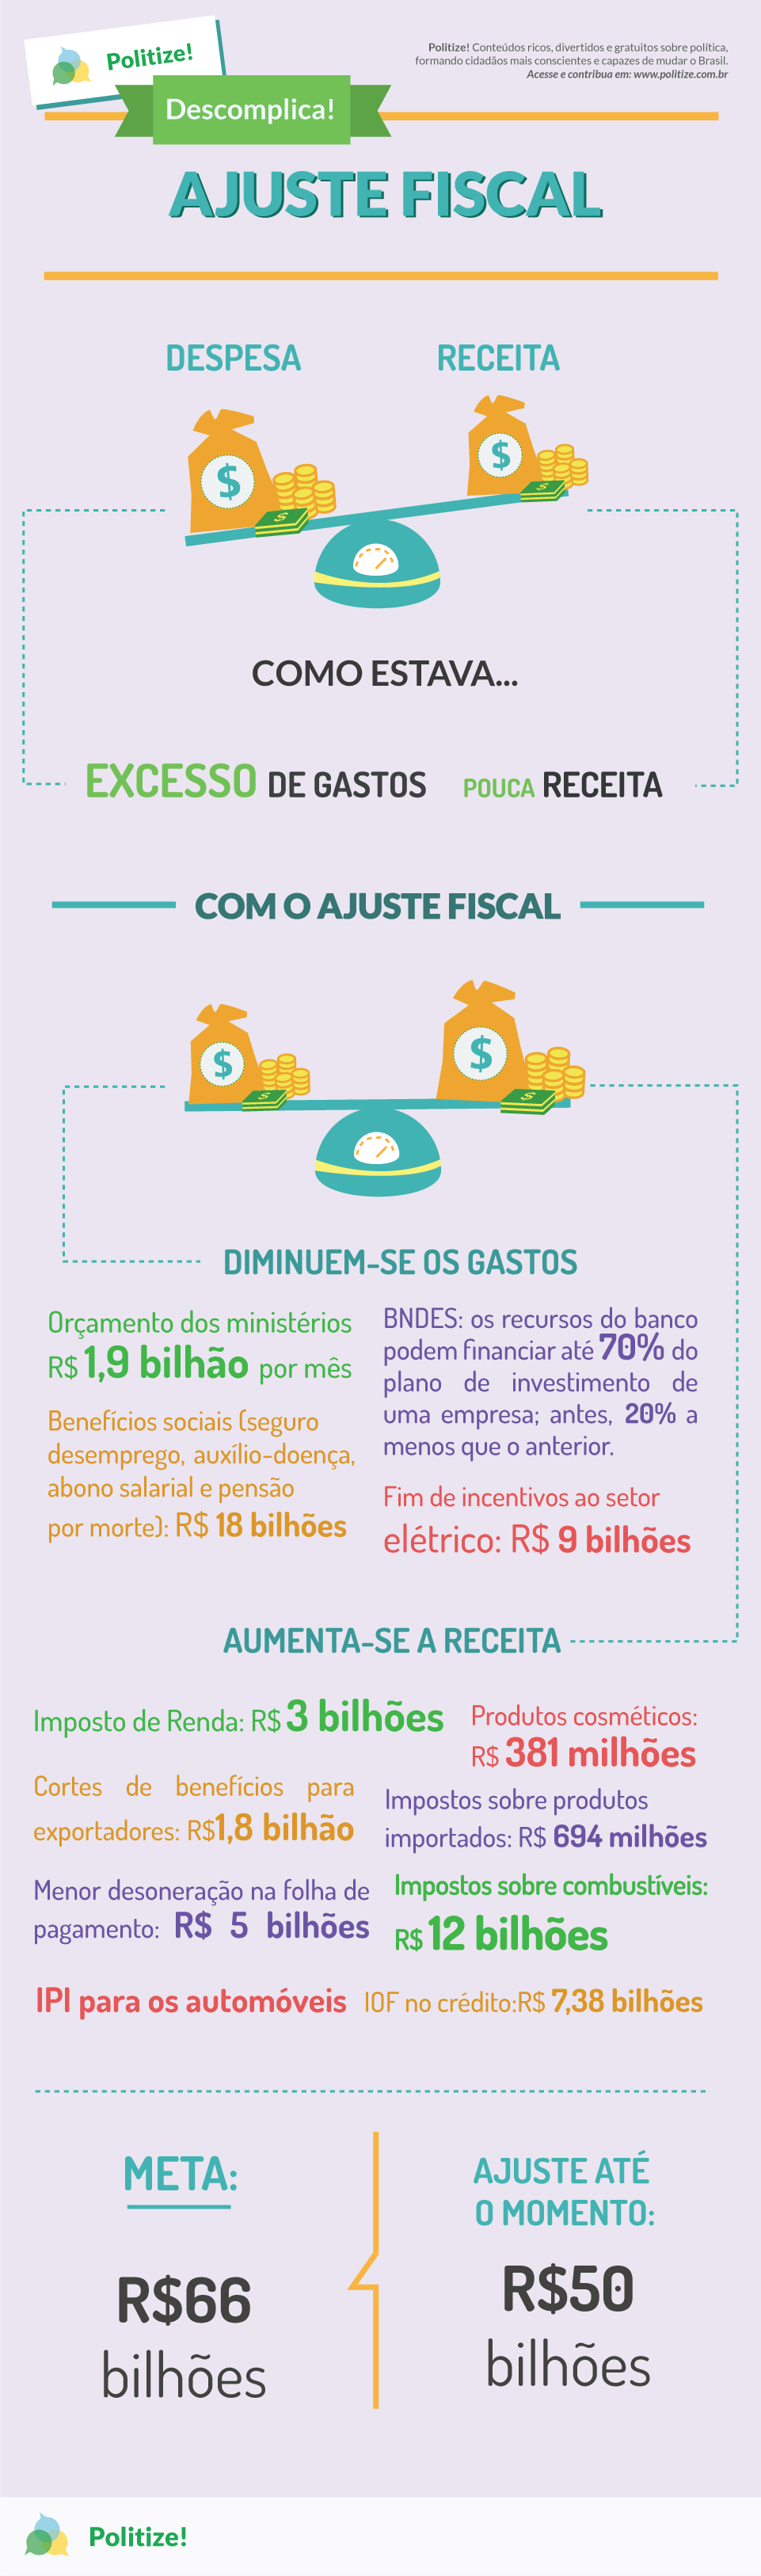 ajuste-fiscal-infografico